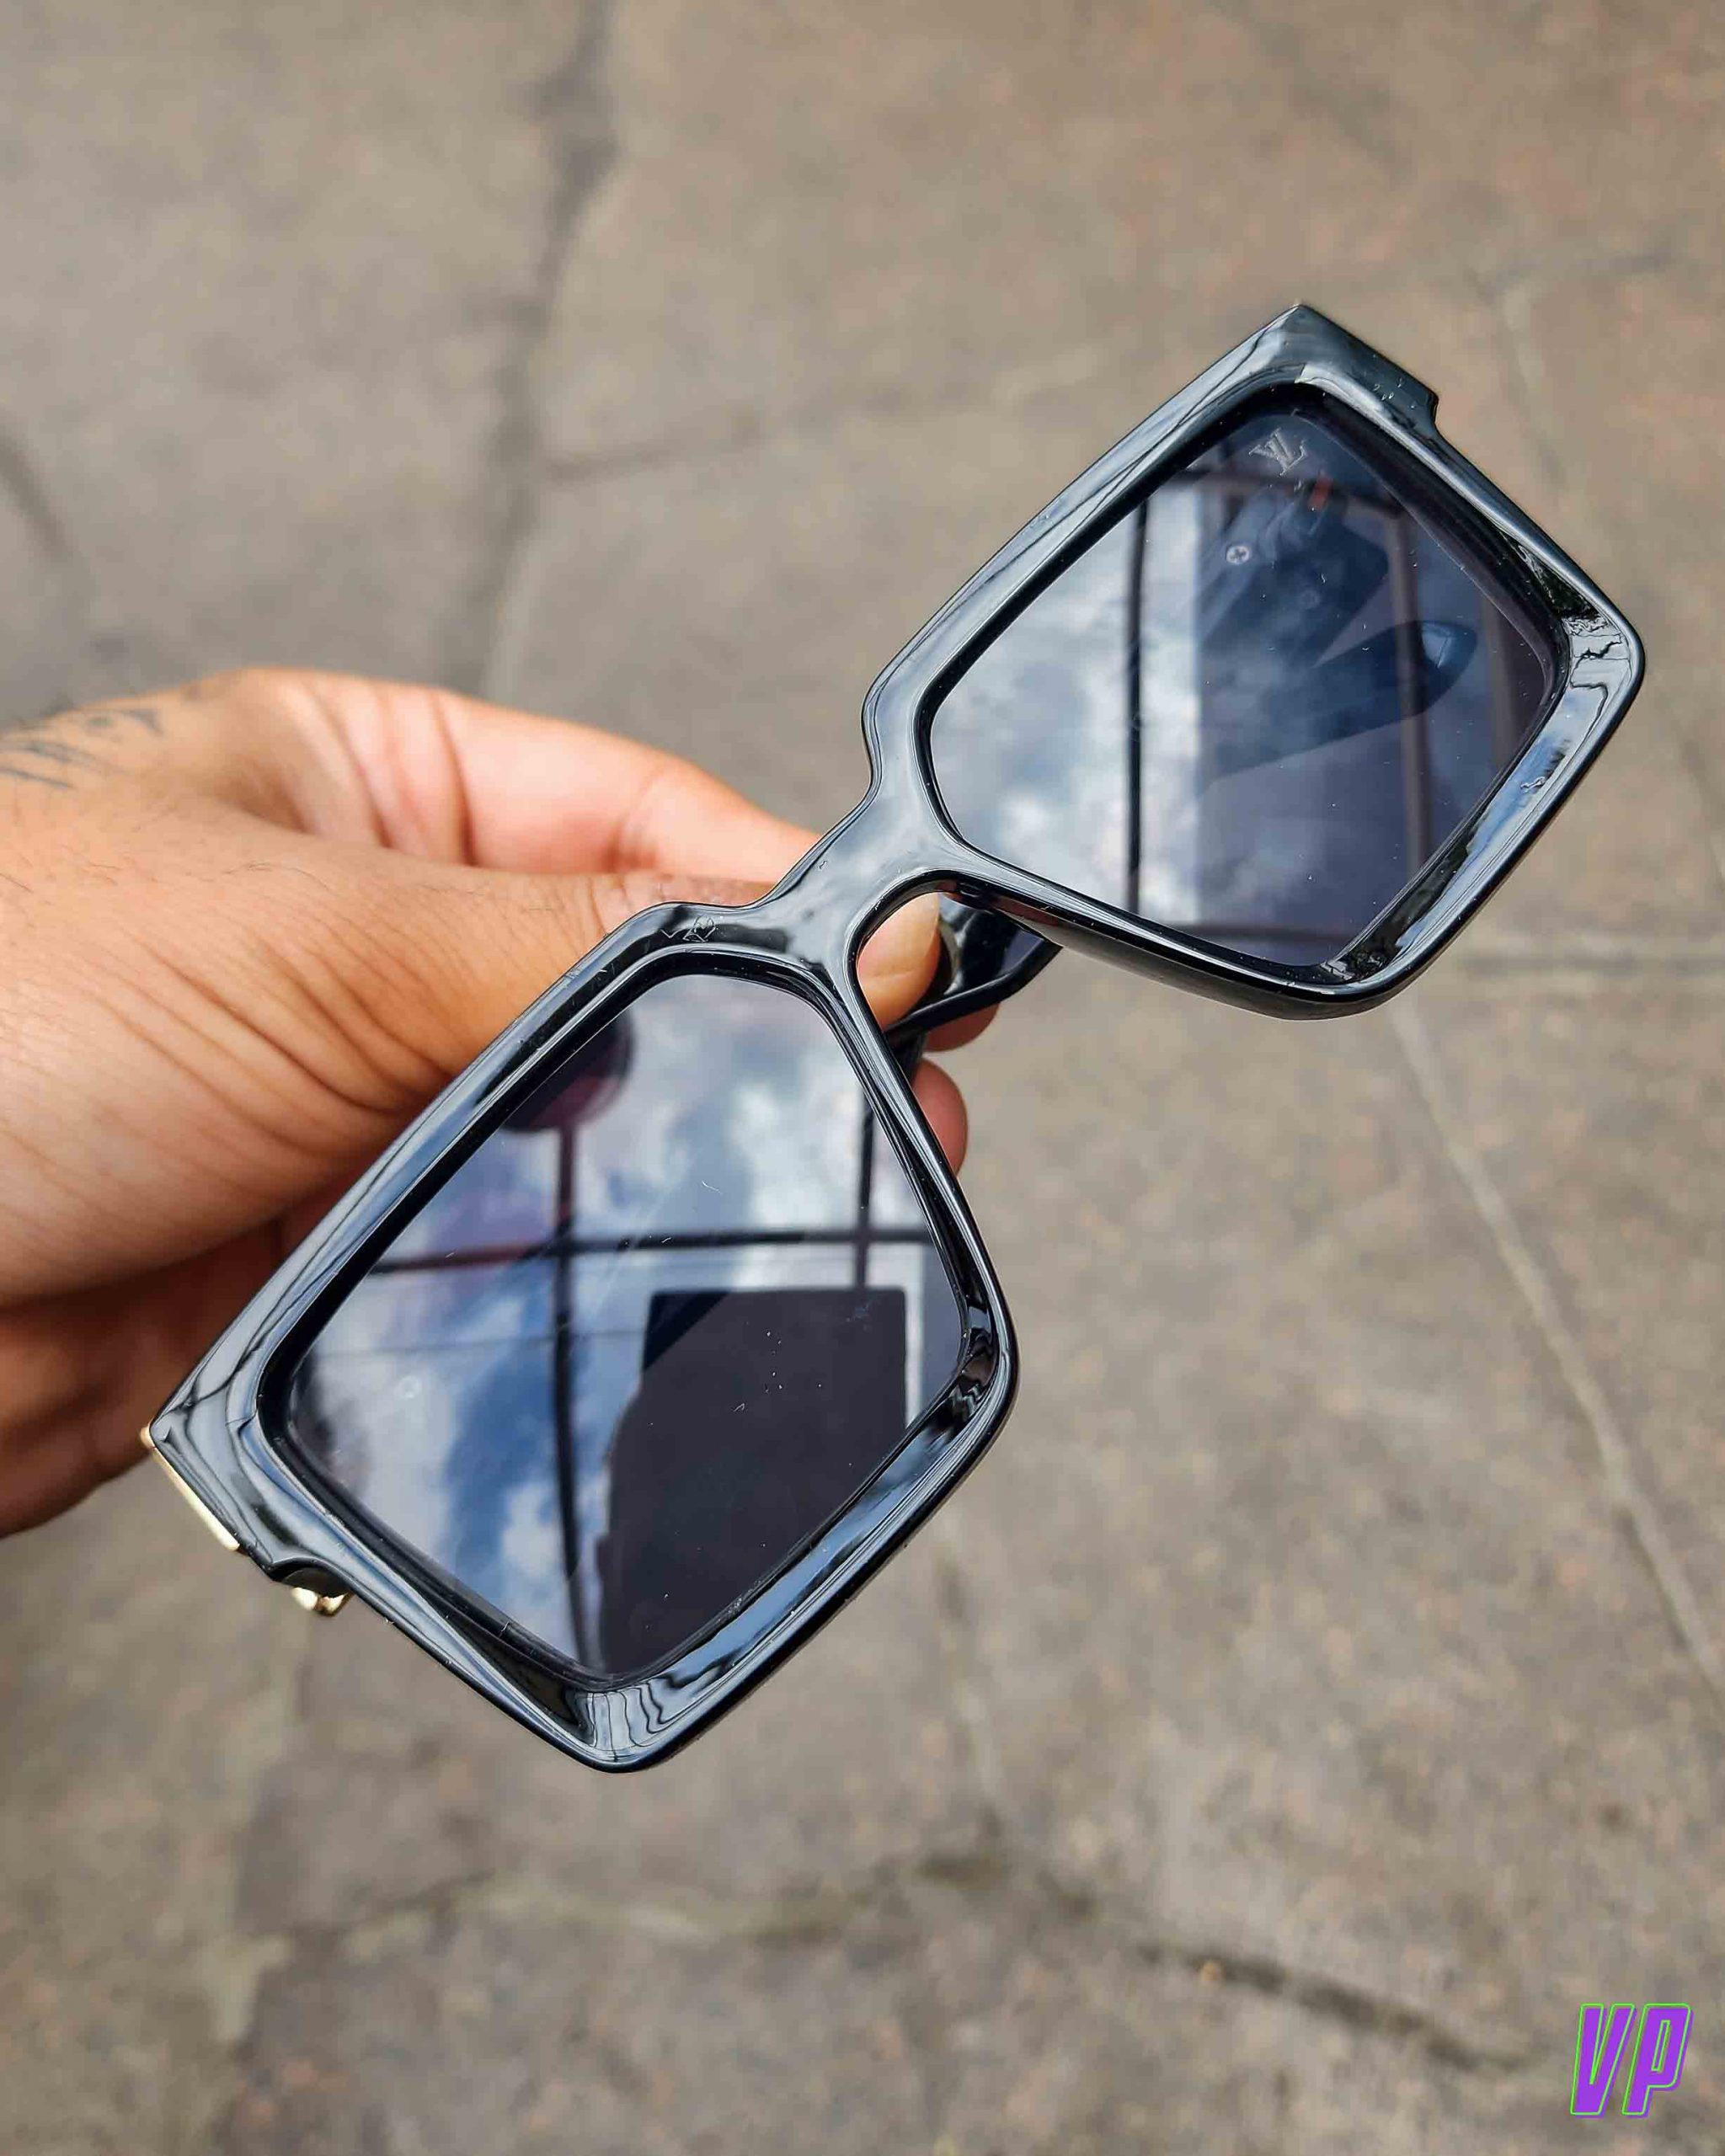 Louis Vuitton LV Clash Square Sunglasses - Black Sunglasses